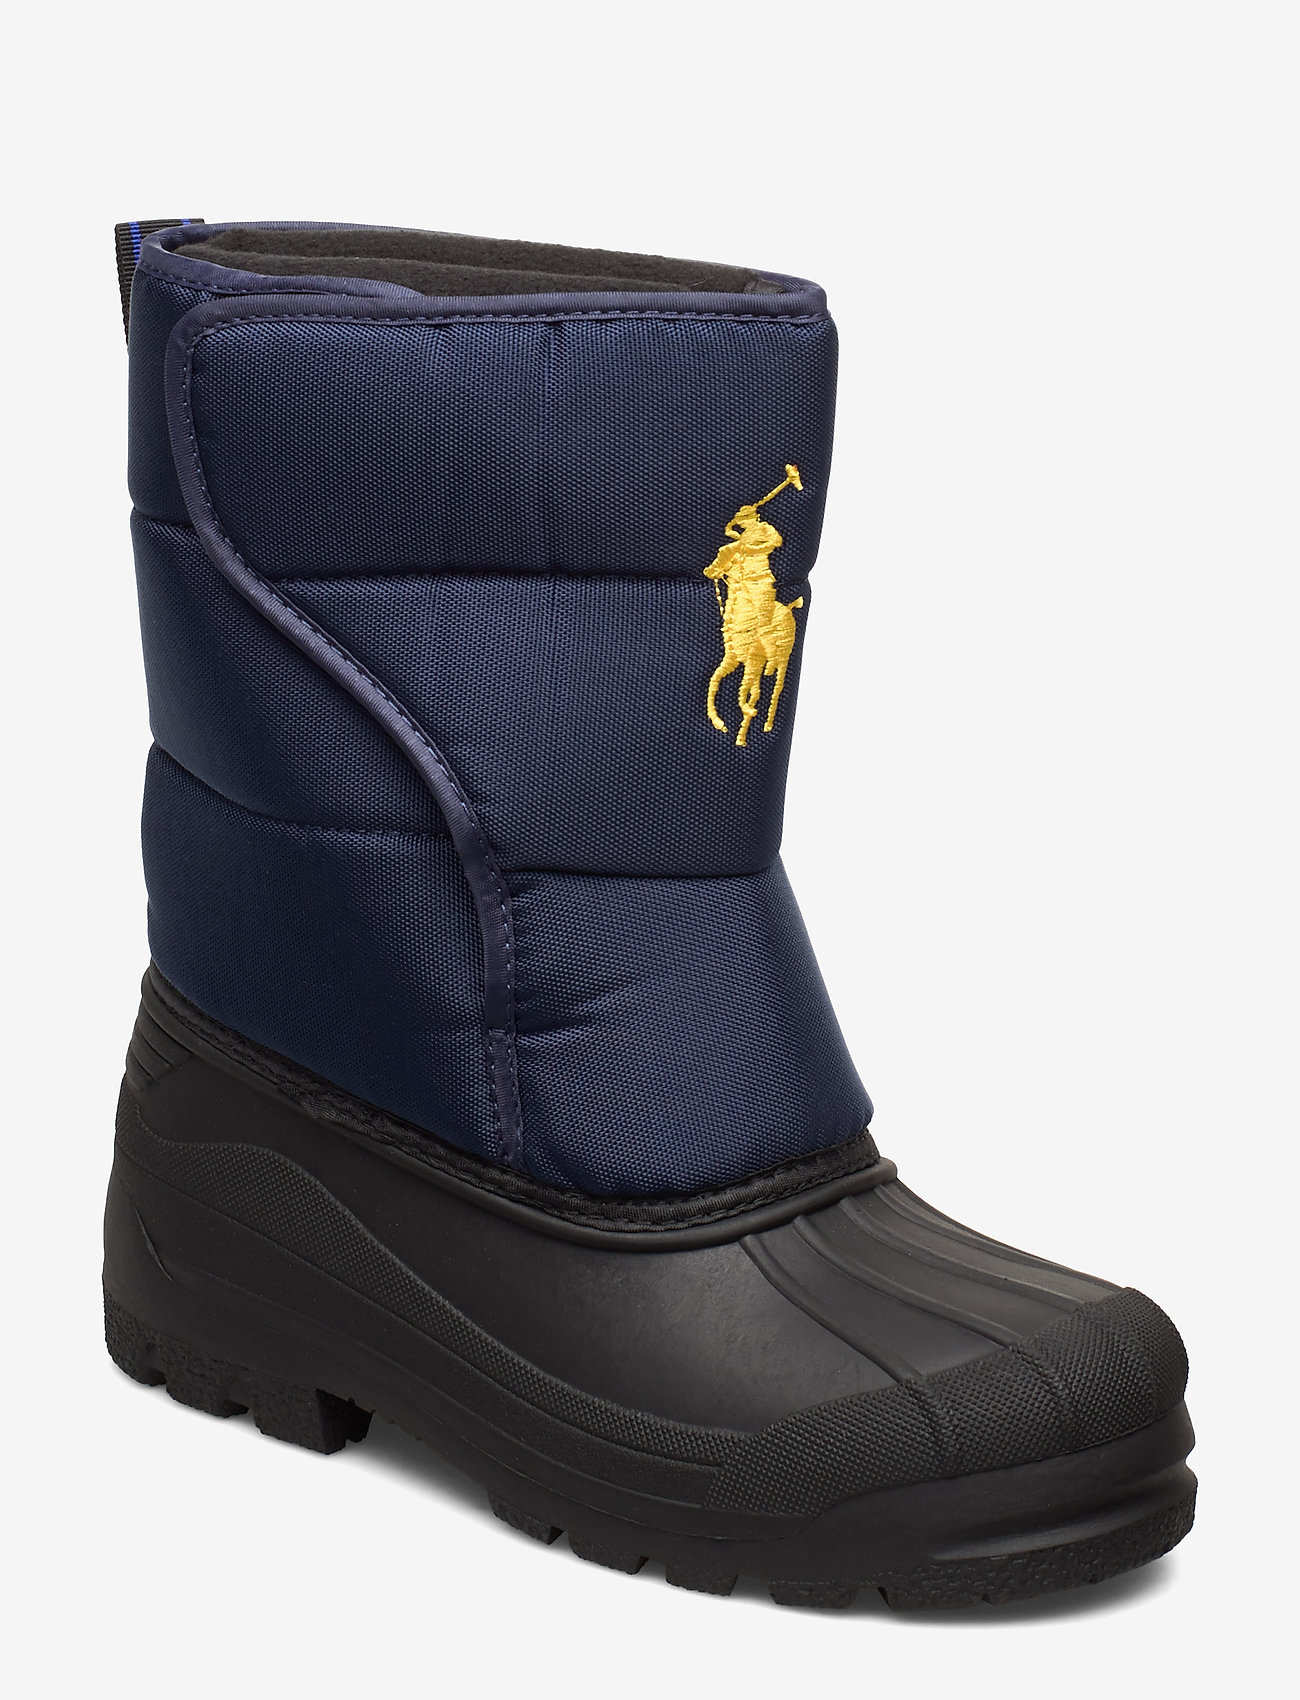 ralph lauren winter boots